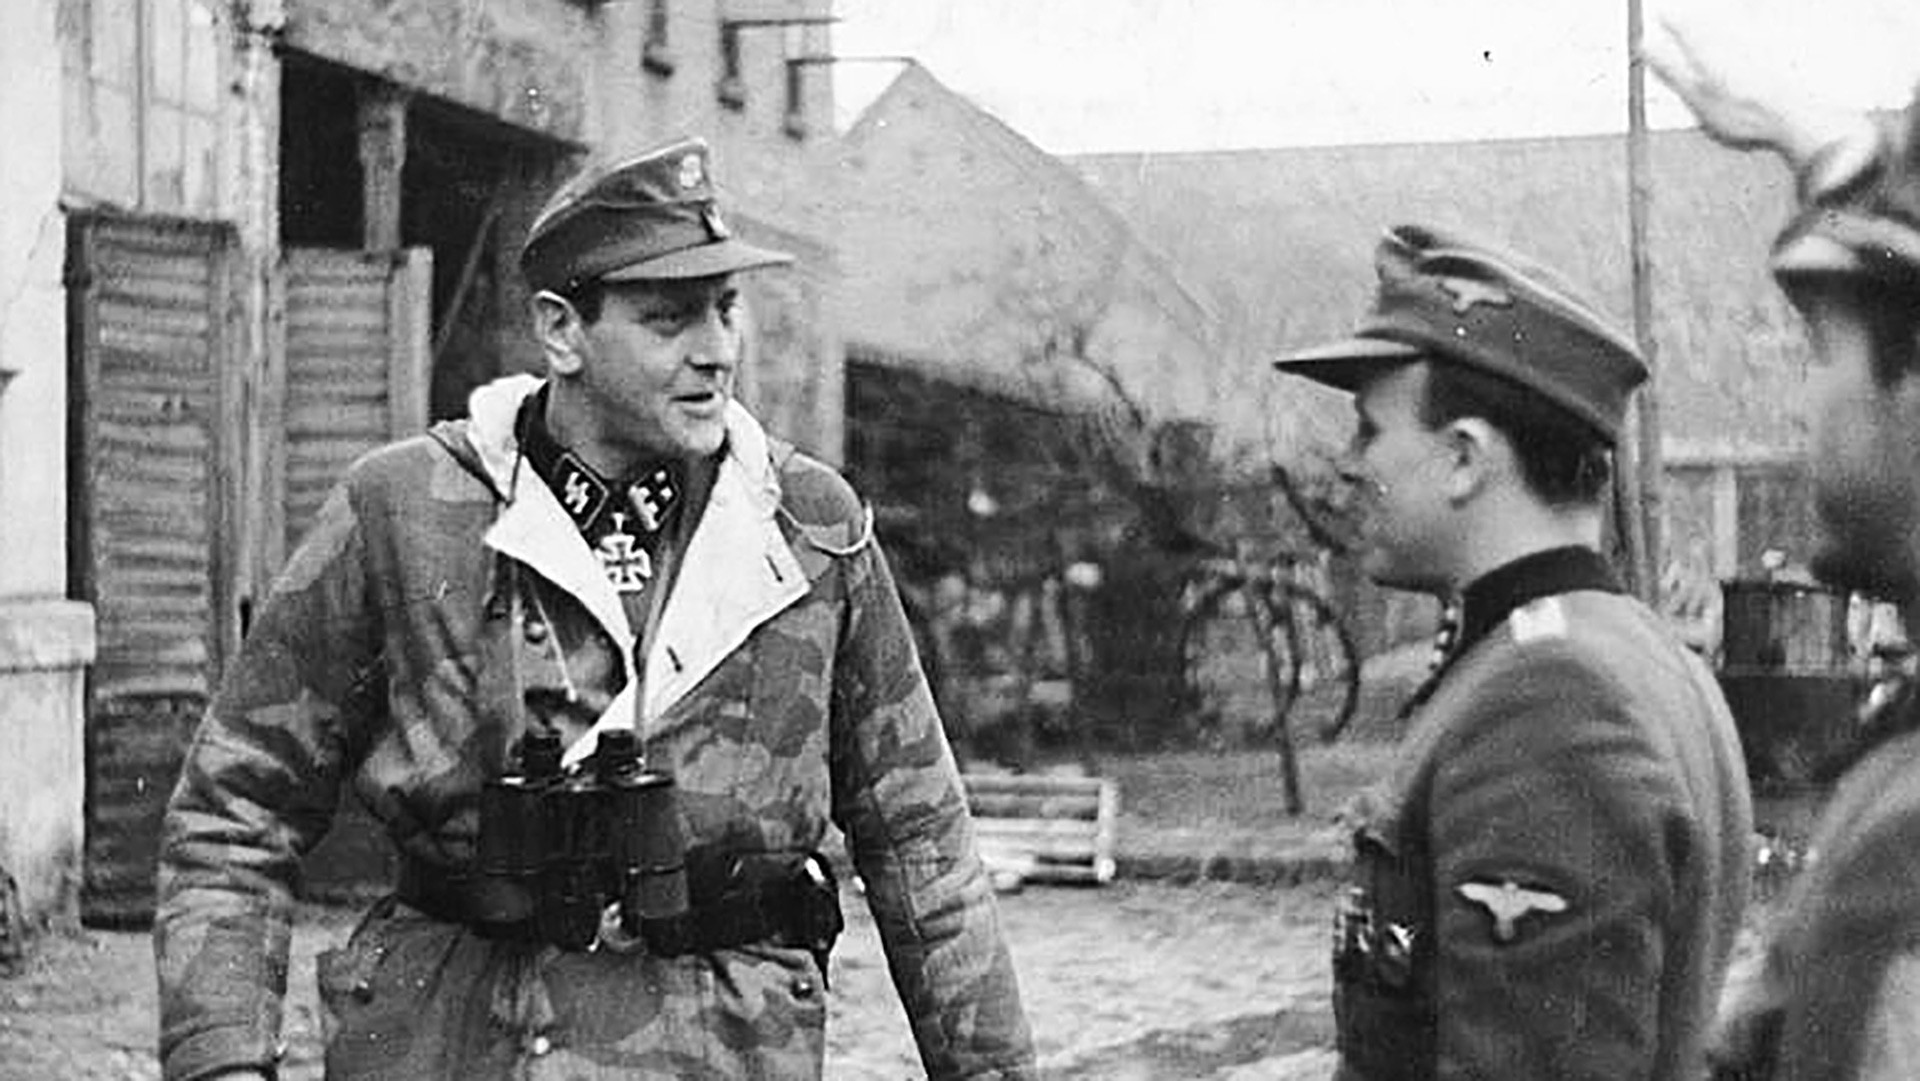 Obersturmbannführer Otto Skorzeny.
